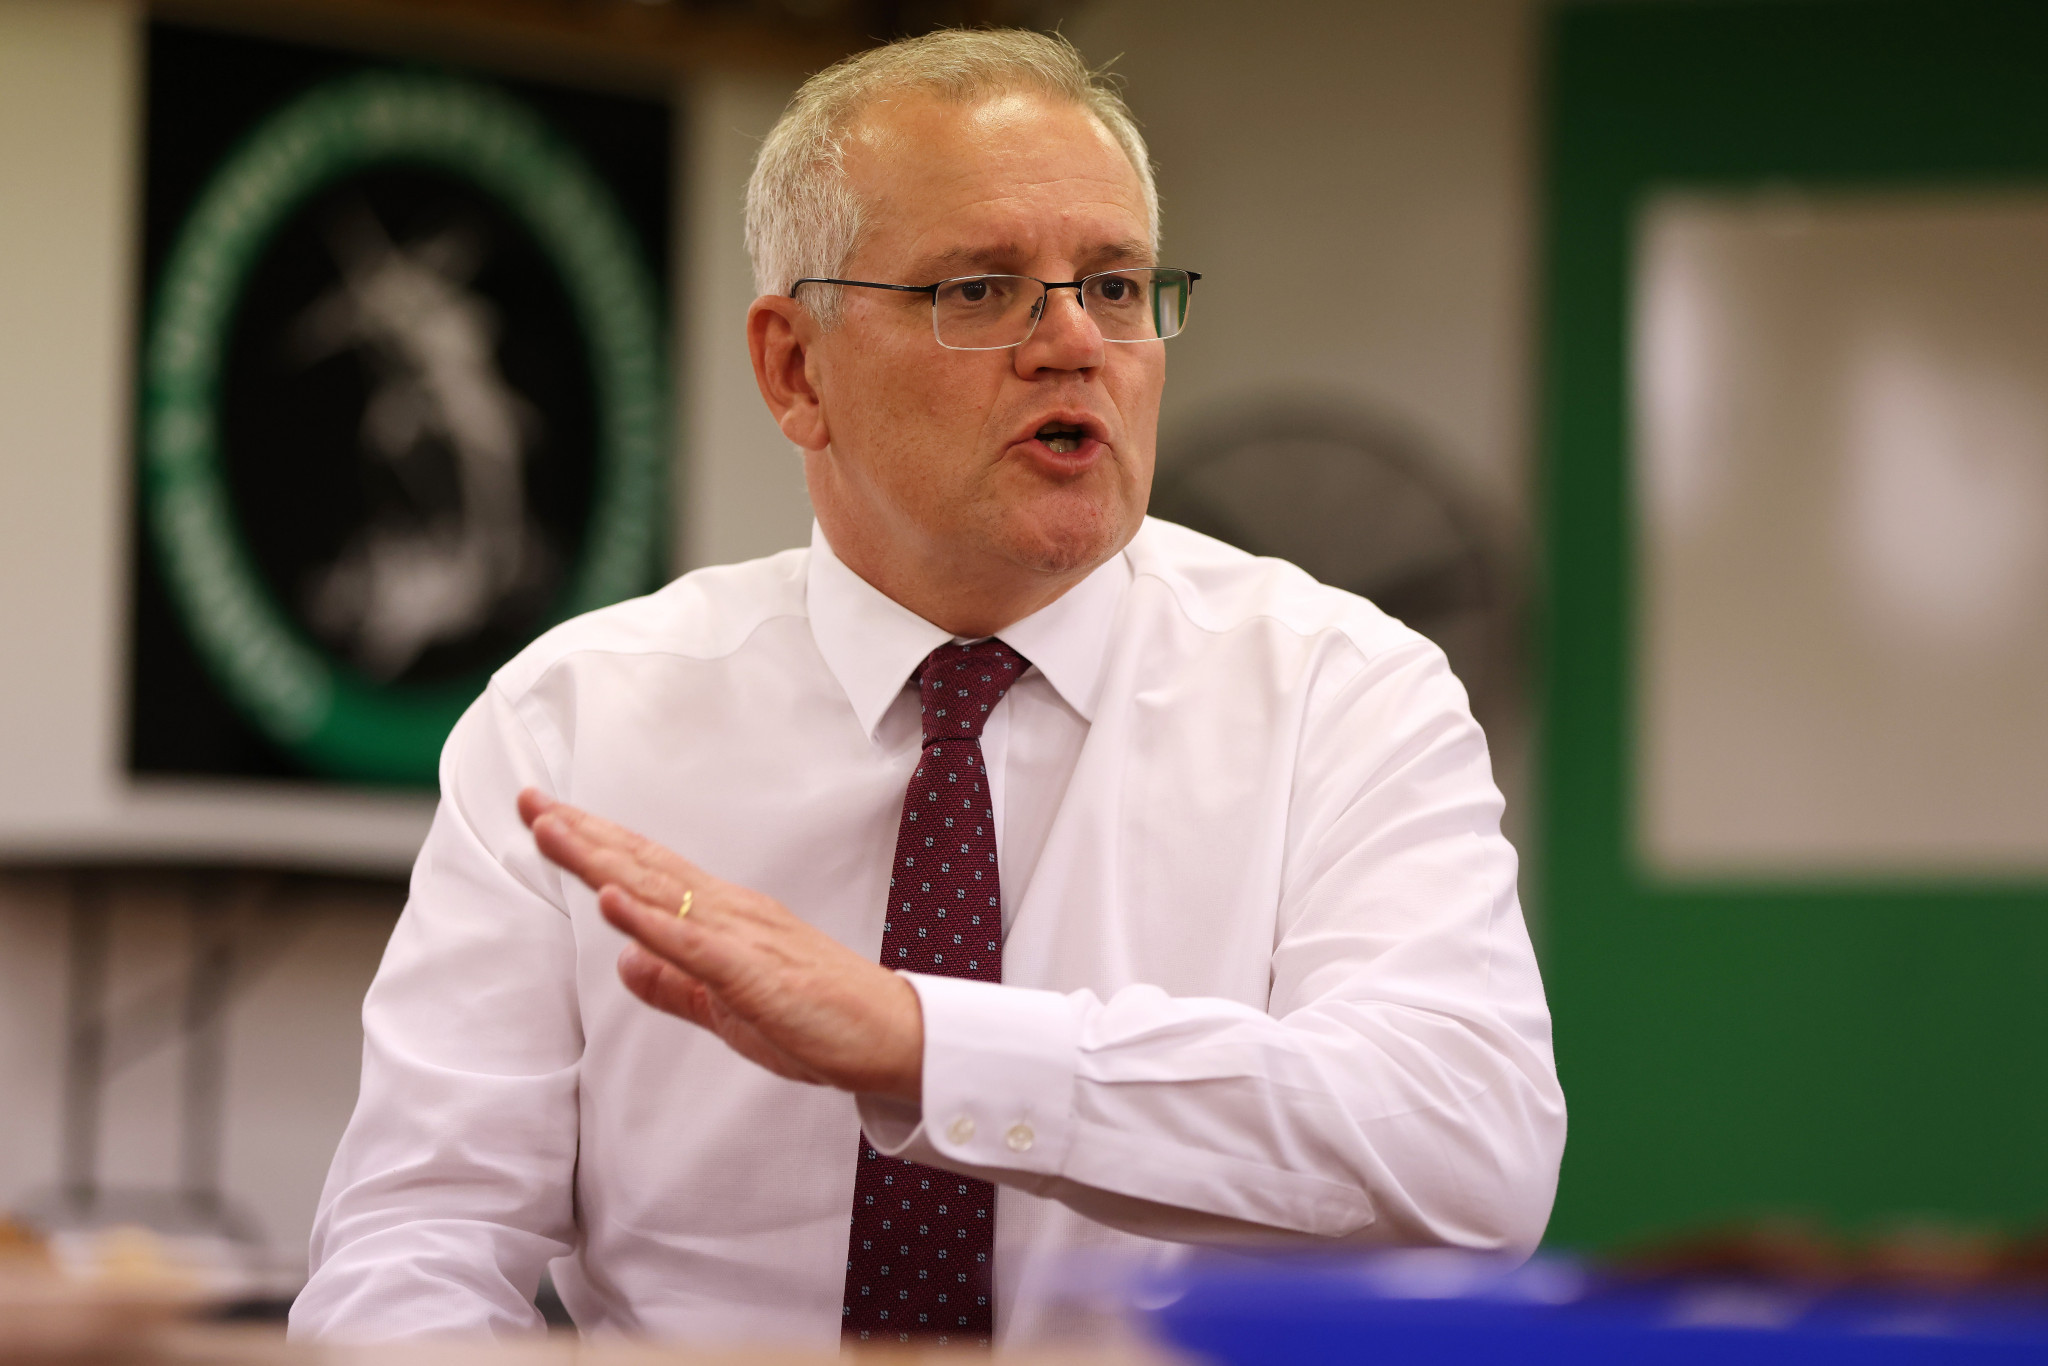 Federal Government key to Brisbane 2032 bid success, claims Australian PM